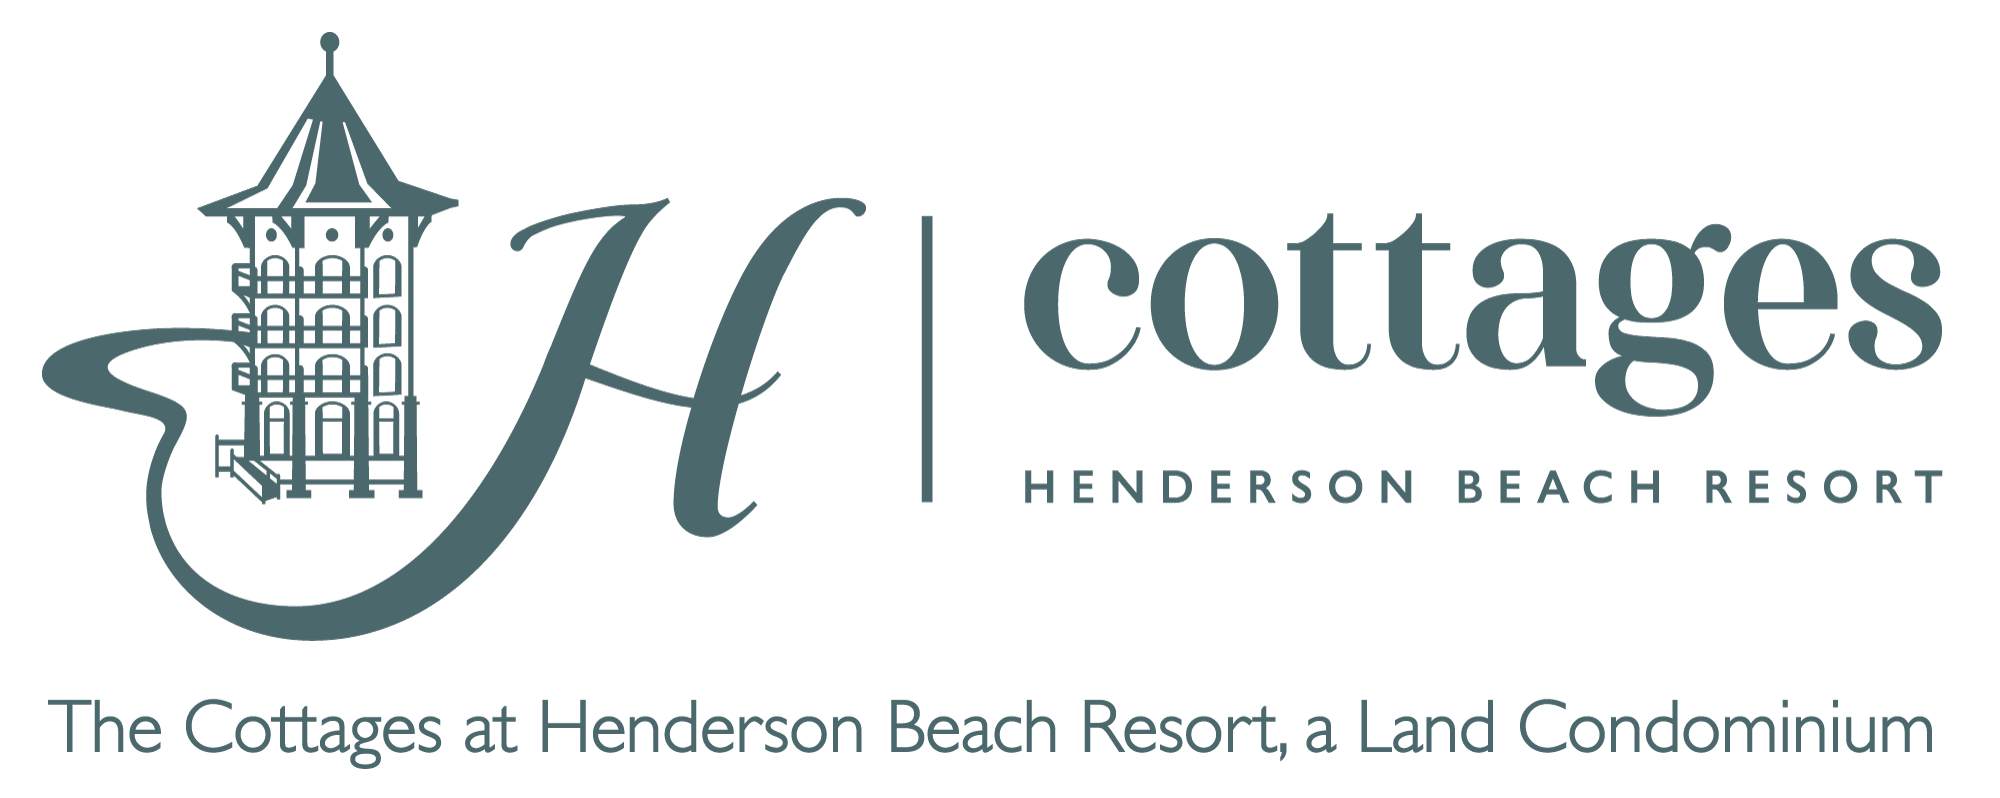 The Cottages at Henderson Beach Resort, a Land Condominium logo